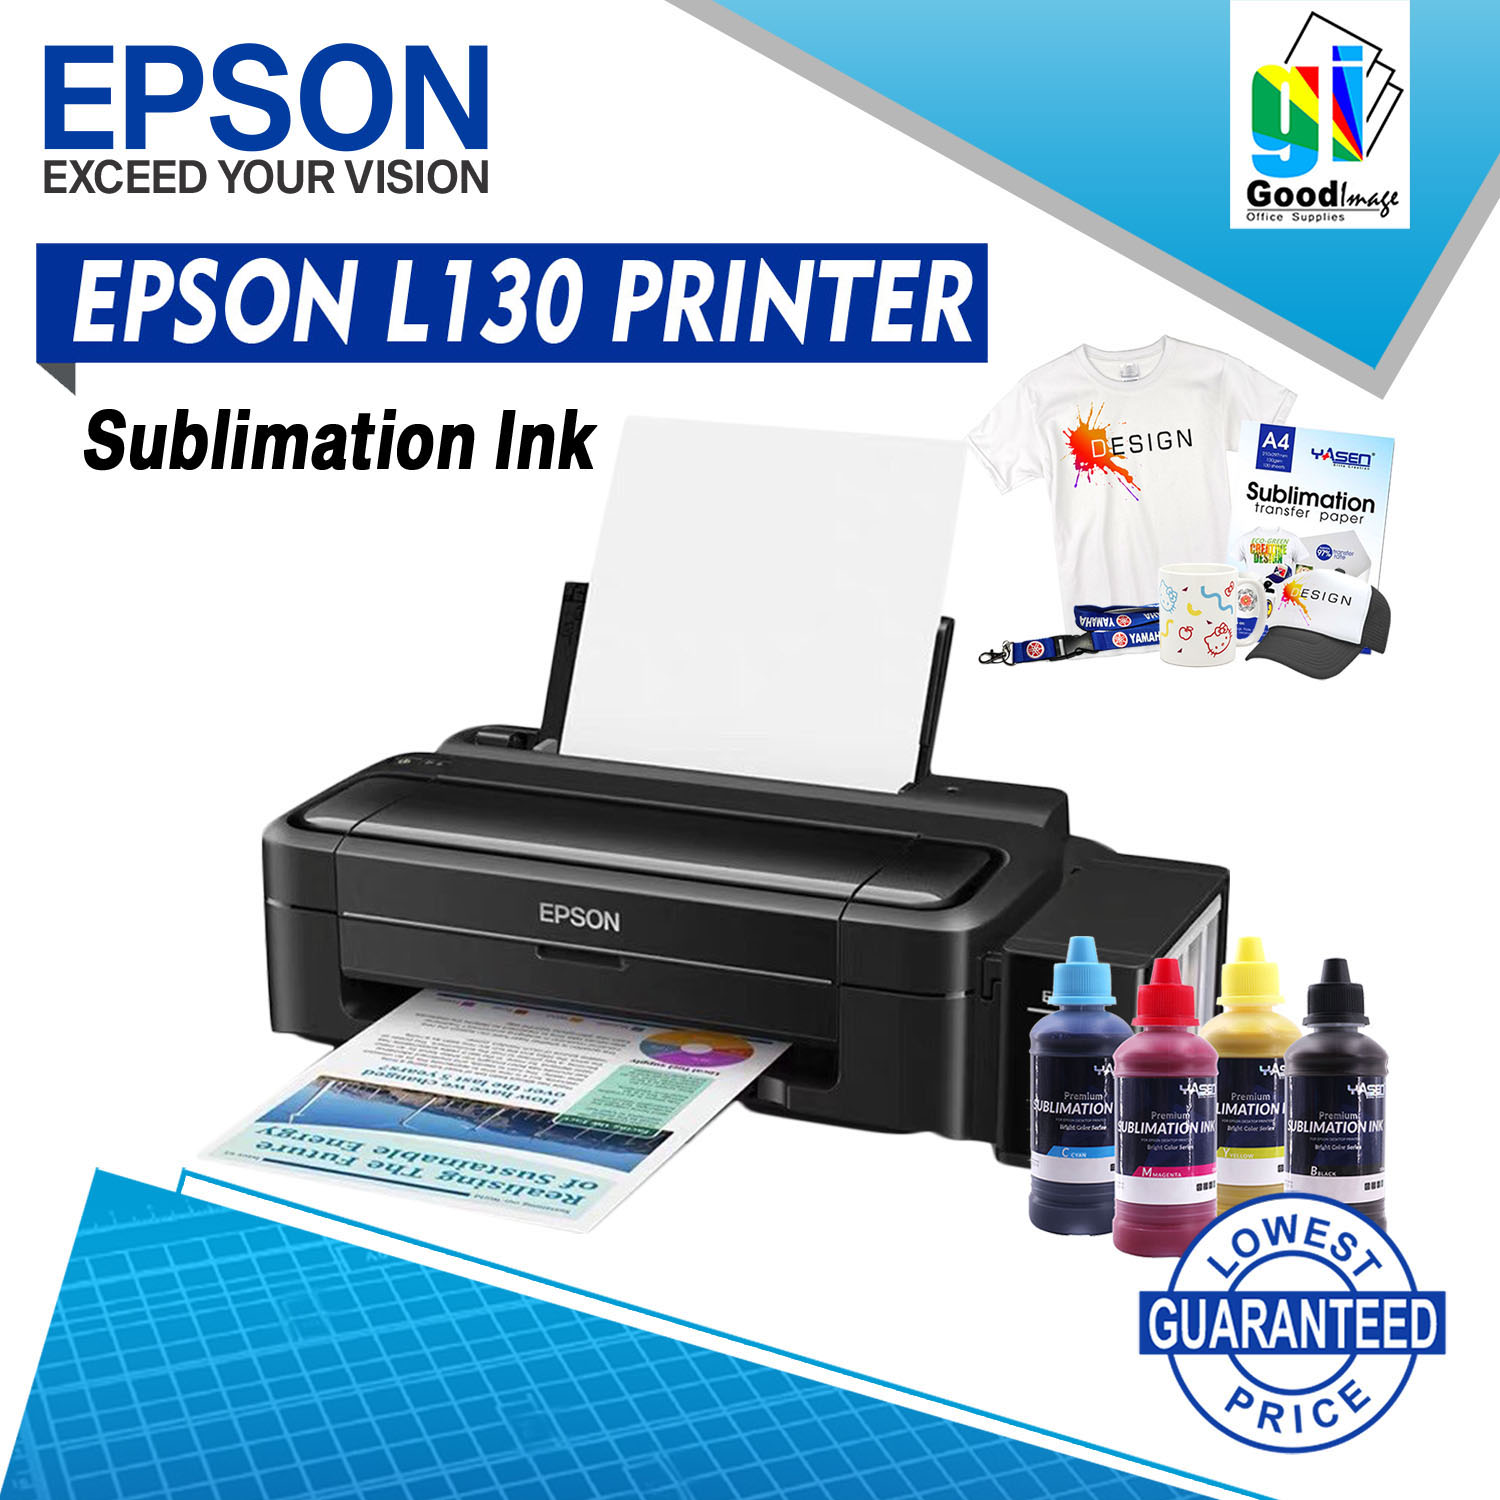 heden Vergadering Verslaafd EPSON L130 PRINTER WITH FREE YASEN SUBLIMATION INK 100ML | Lazada PH